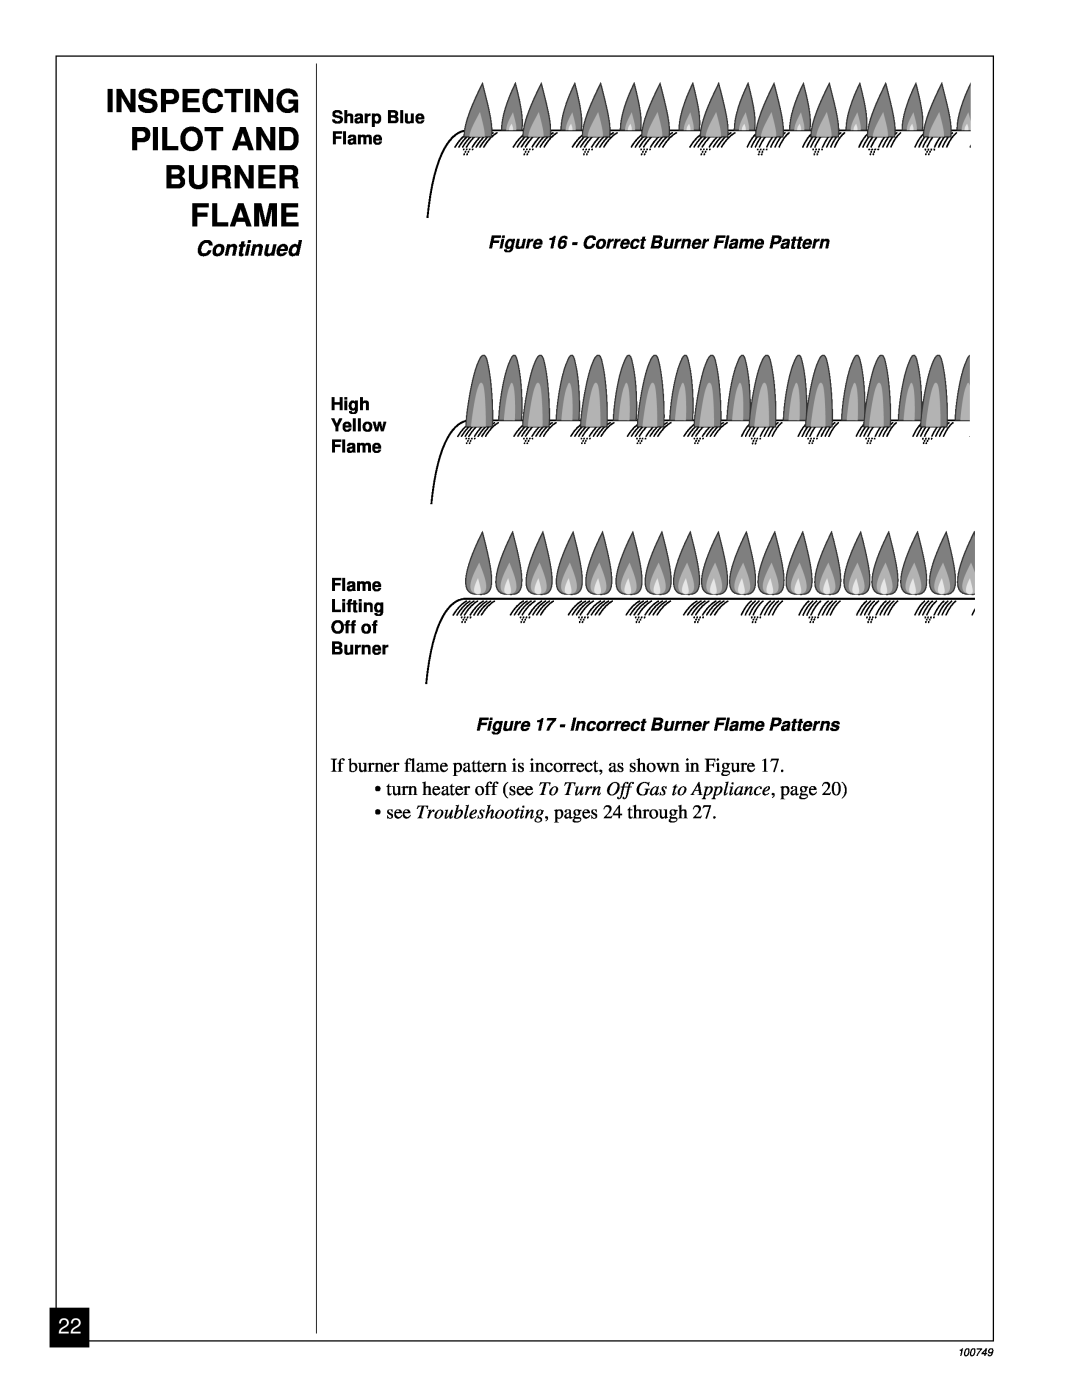 Desa GVC35NA, GVC50NA Inspecting Pilot And Burner Flame, Continued, Sharp Blue Flame, Correct Burner Flame Pattern, 100749 